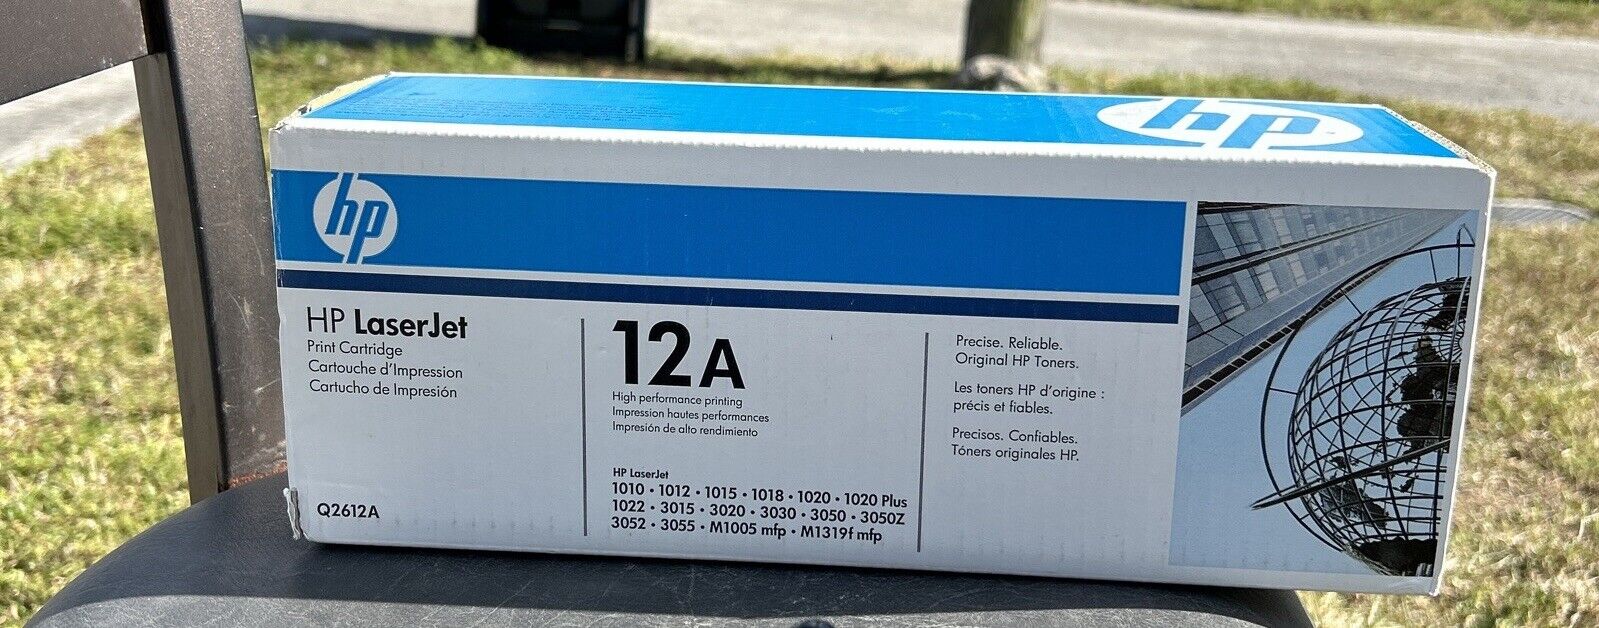 Genuine HP LaserJet 12A Print Cartridge Q2612A NEW